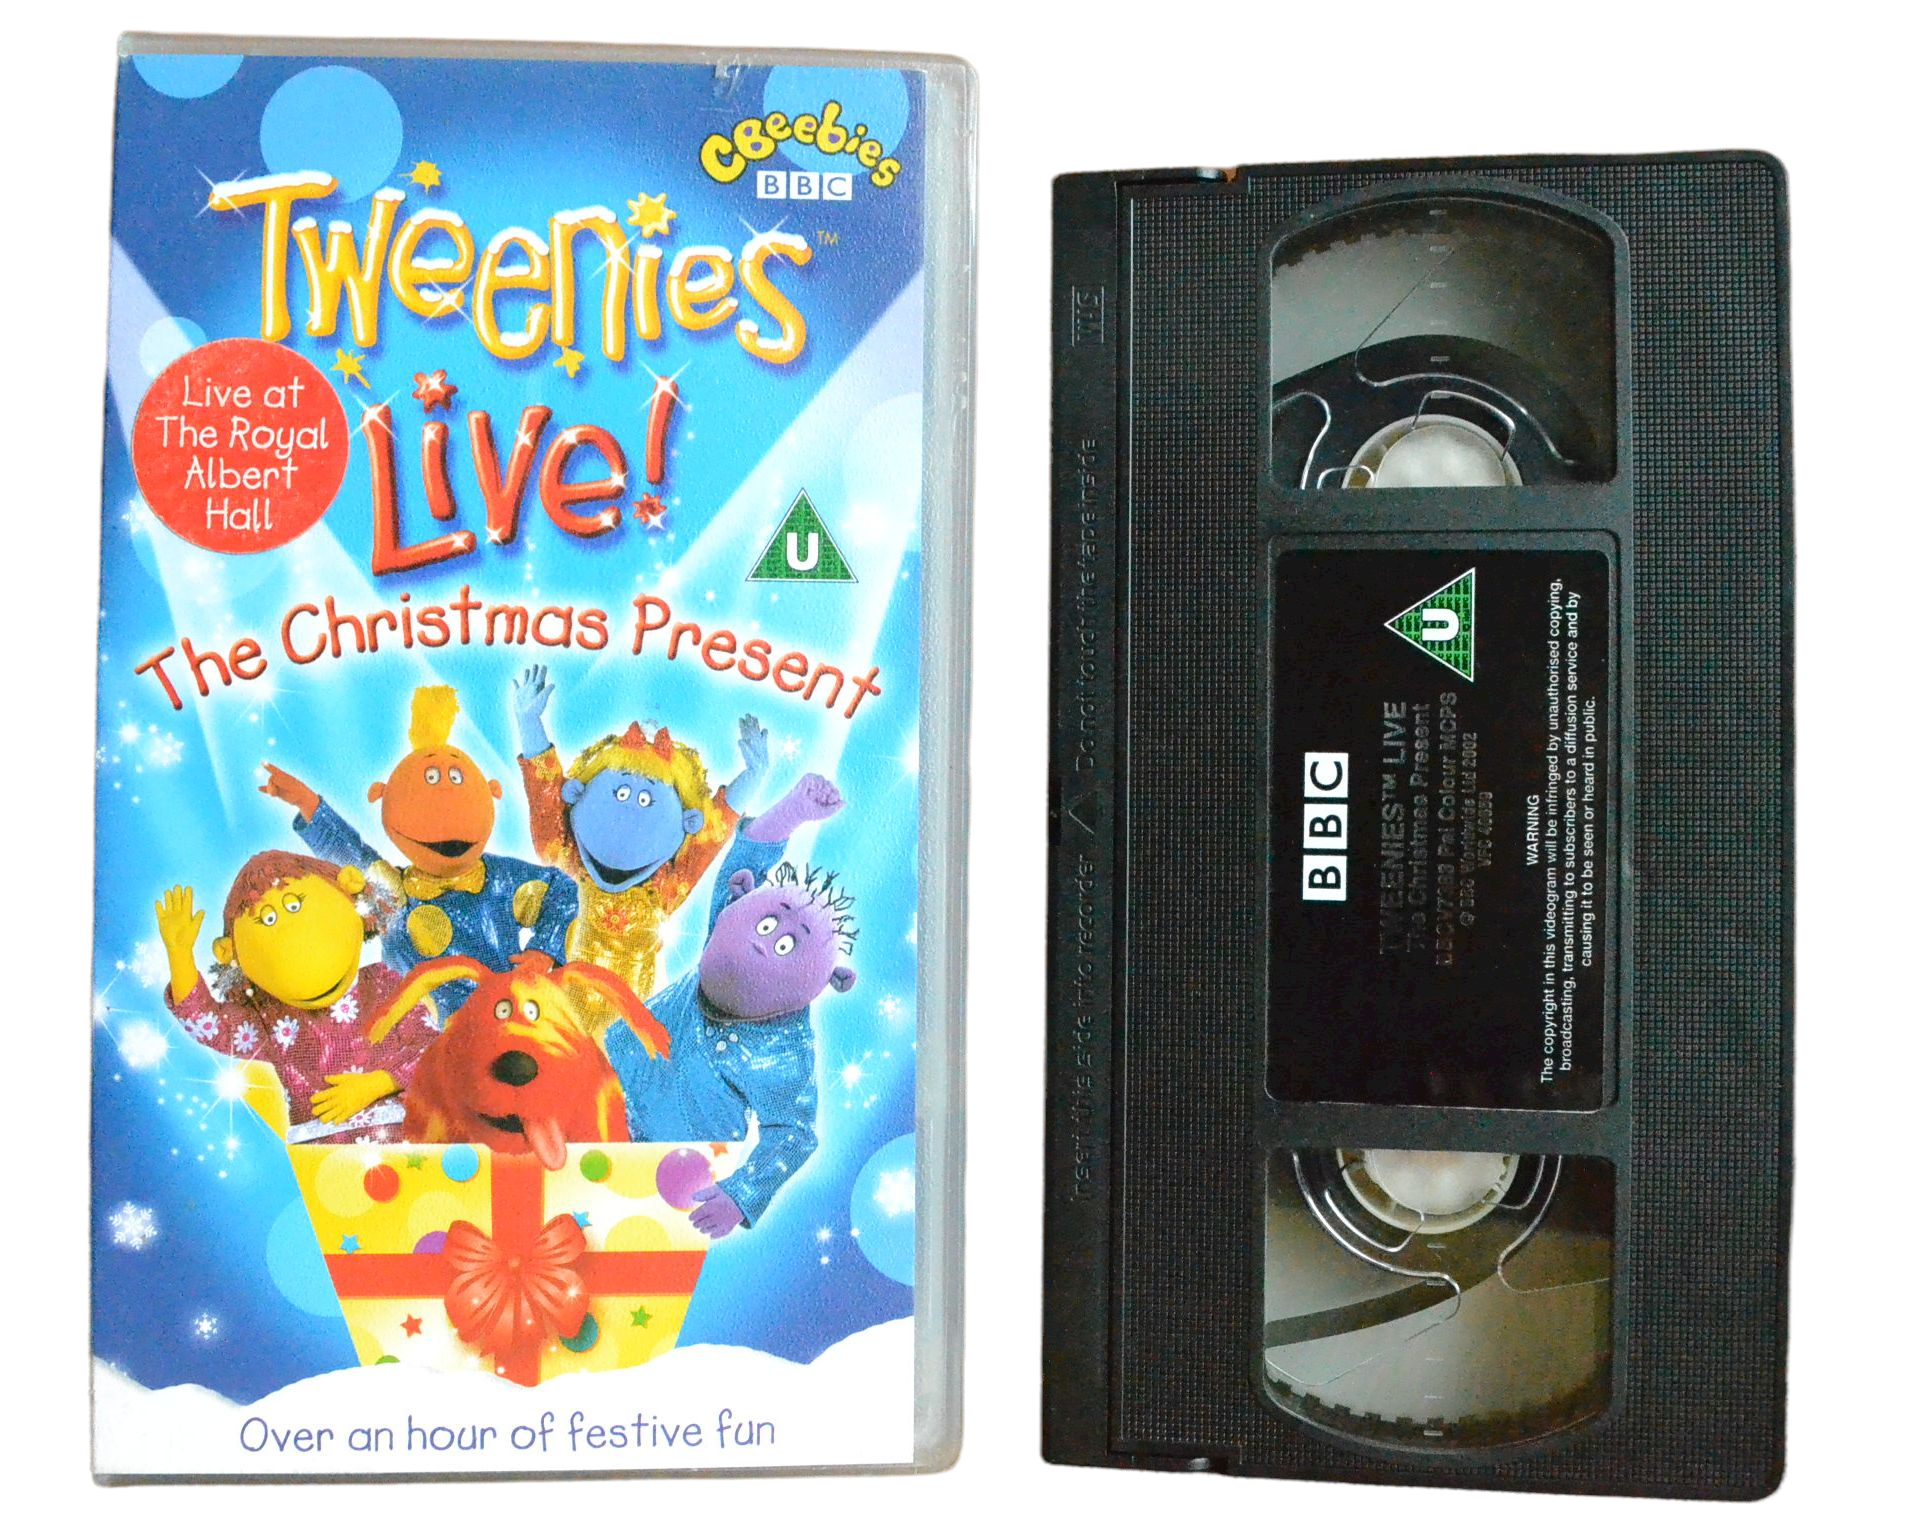 Tweenies Live! The Christmas Present - Cbeebies BBC - Children’s - Pal VHS-